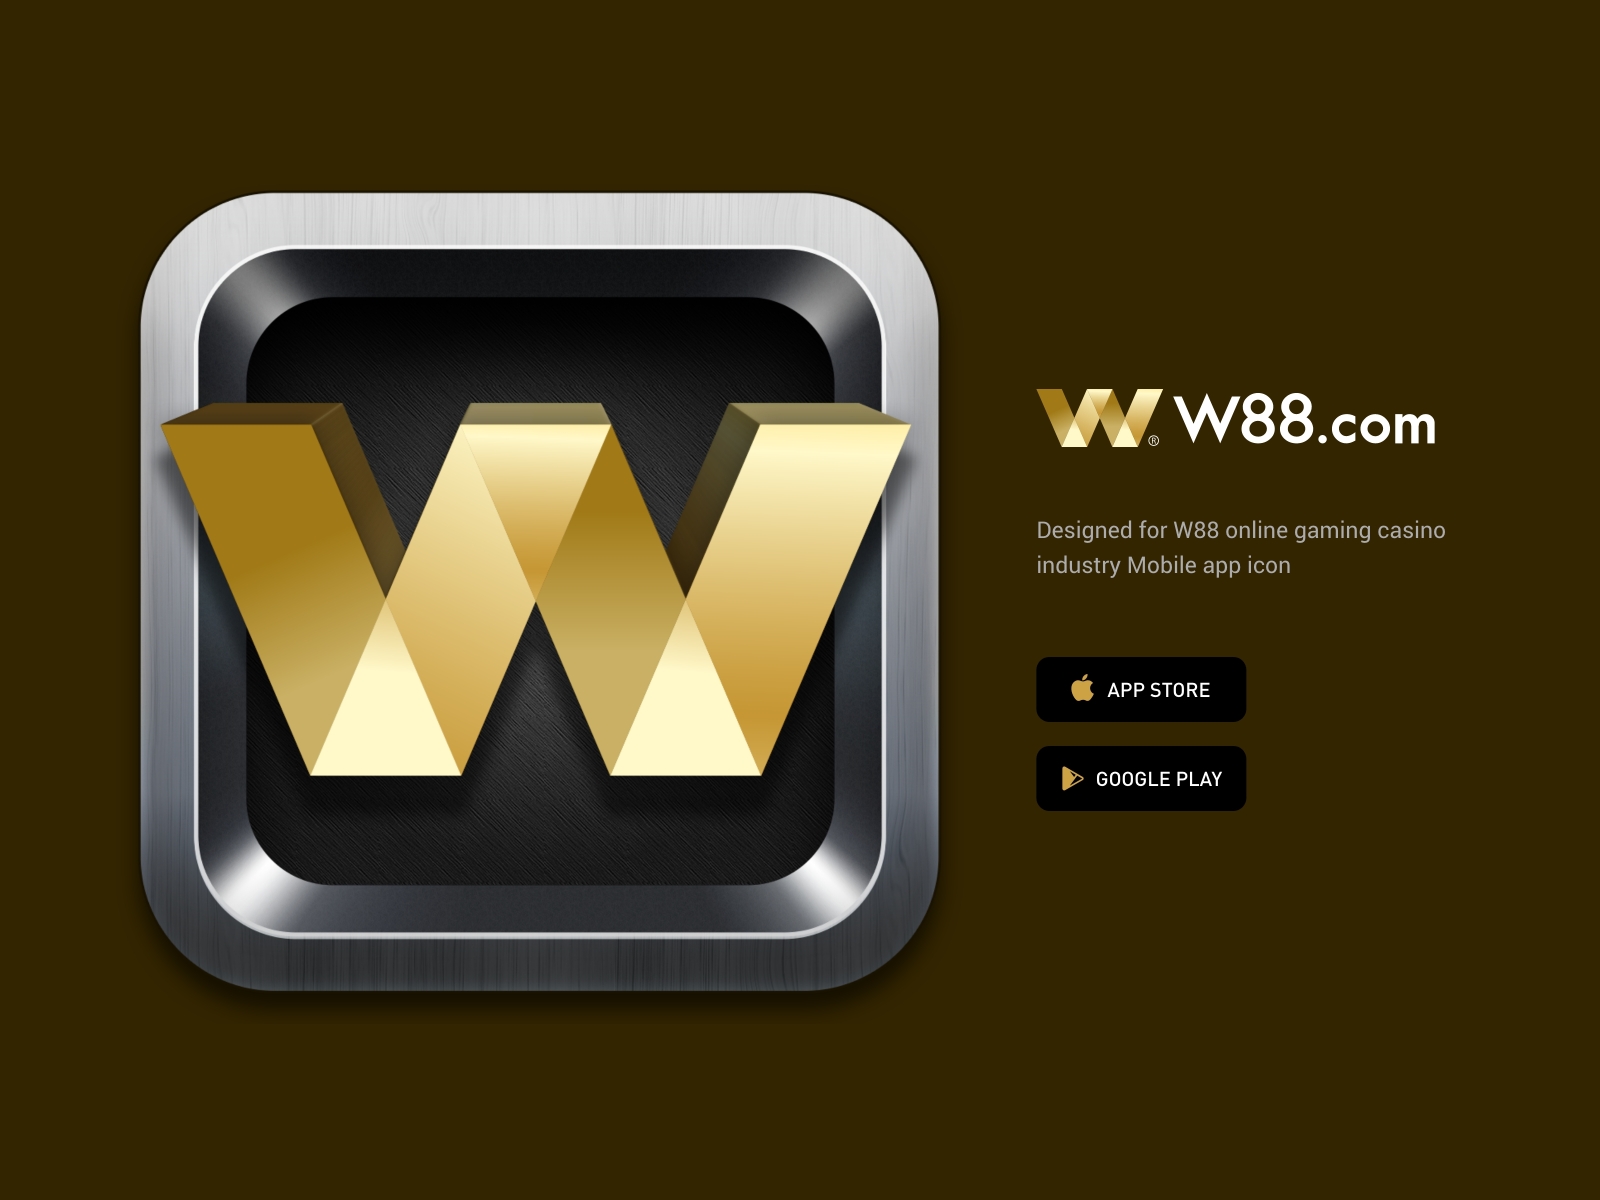 W88 app icon by leymark lachica on Dribbble